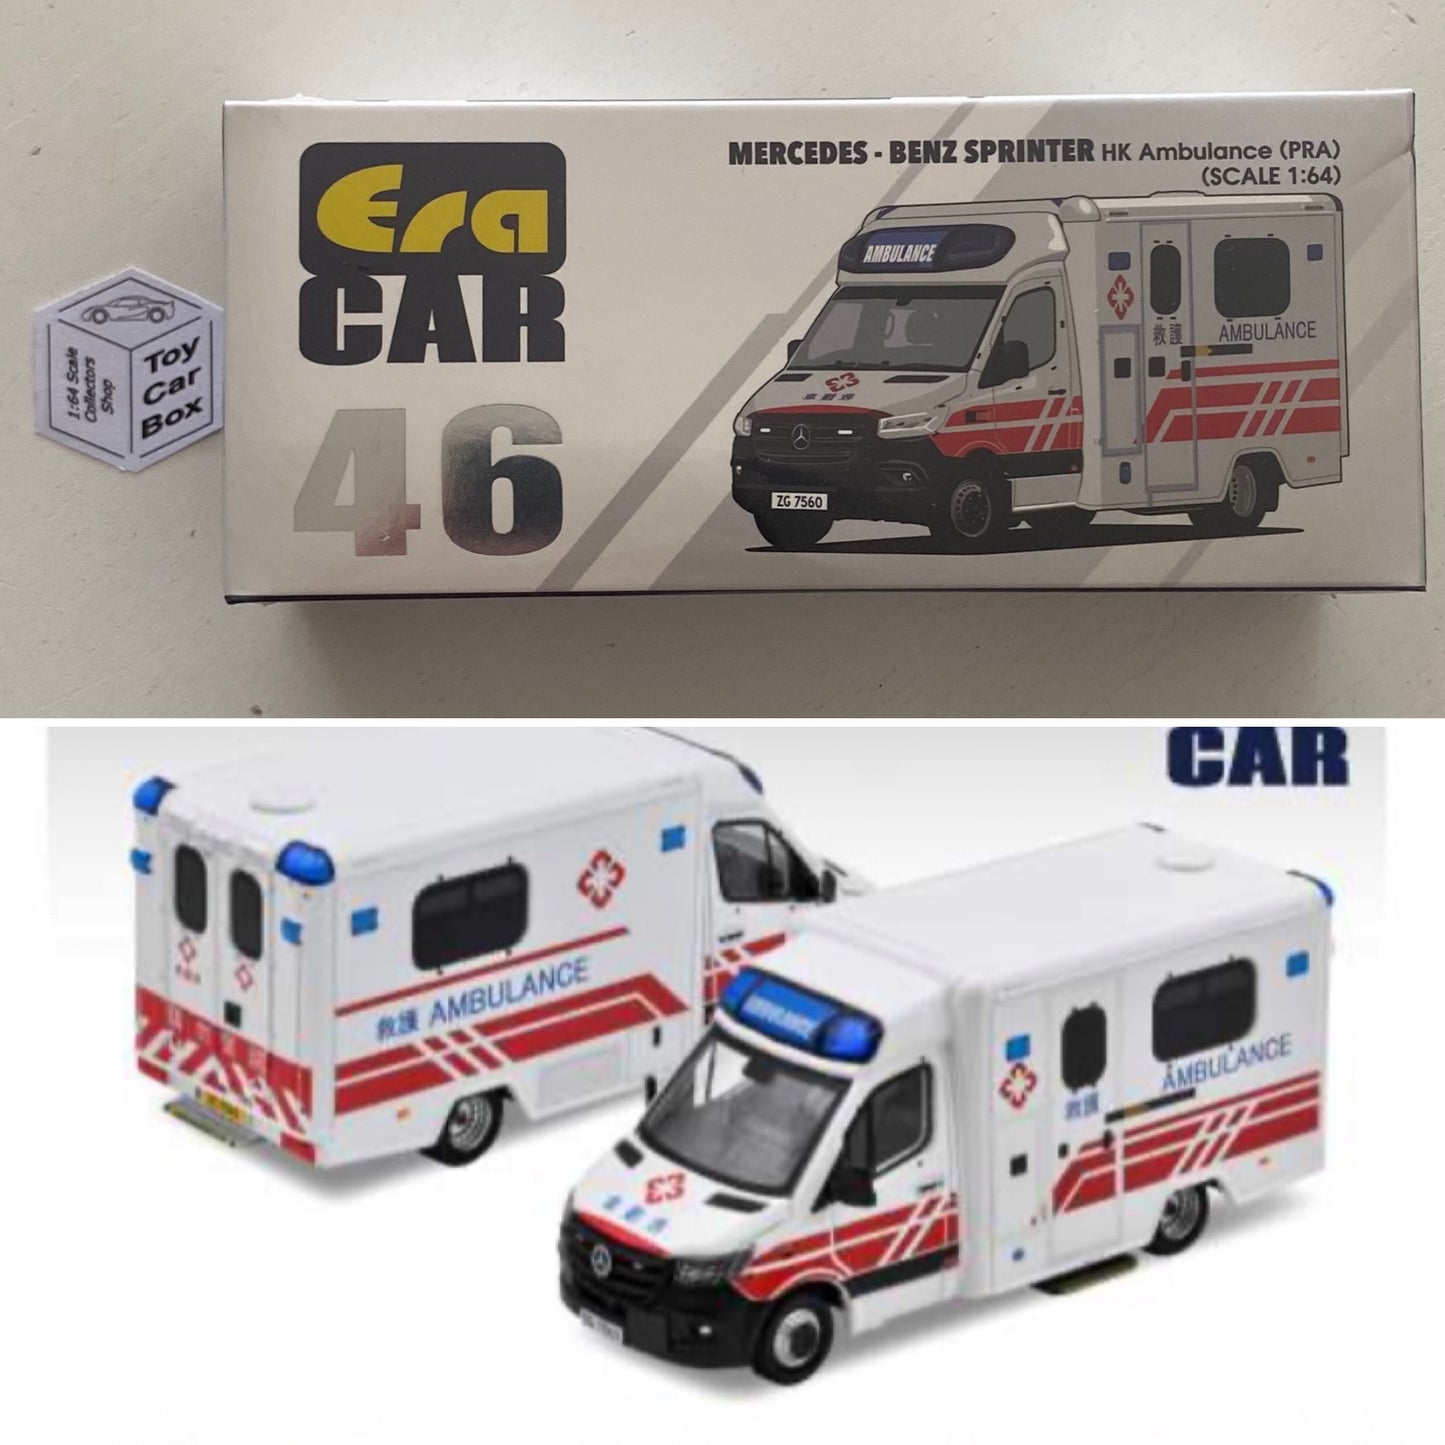 ERA CAR #46 - Mercedes-Benz Sprinter (1:64 Scale - HK Ambulance - Boxed) J92g